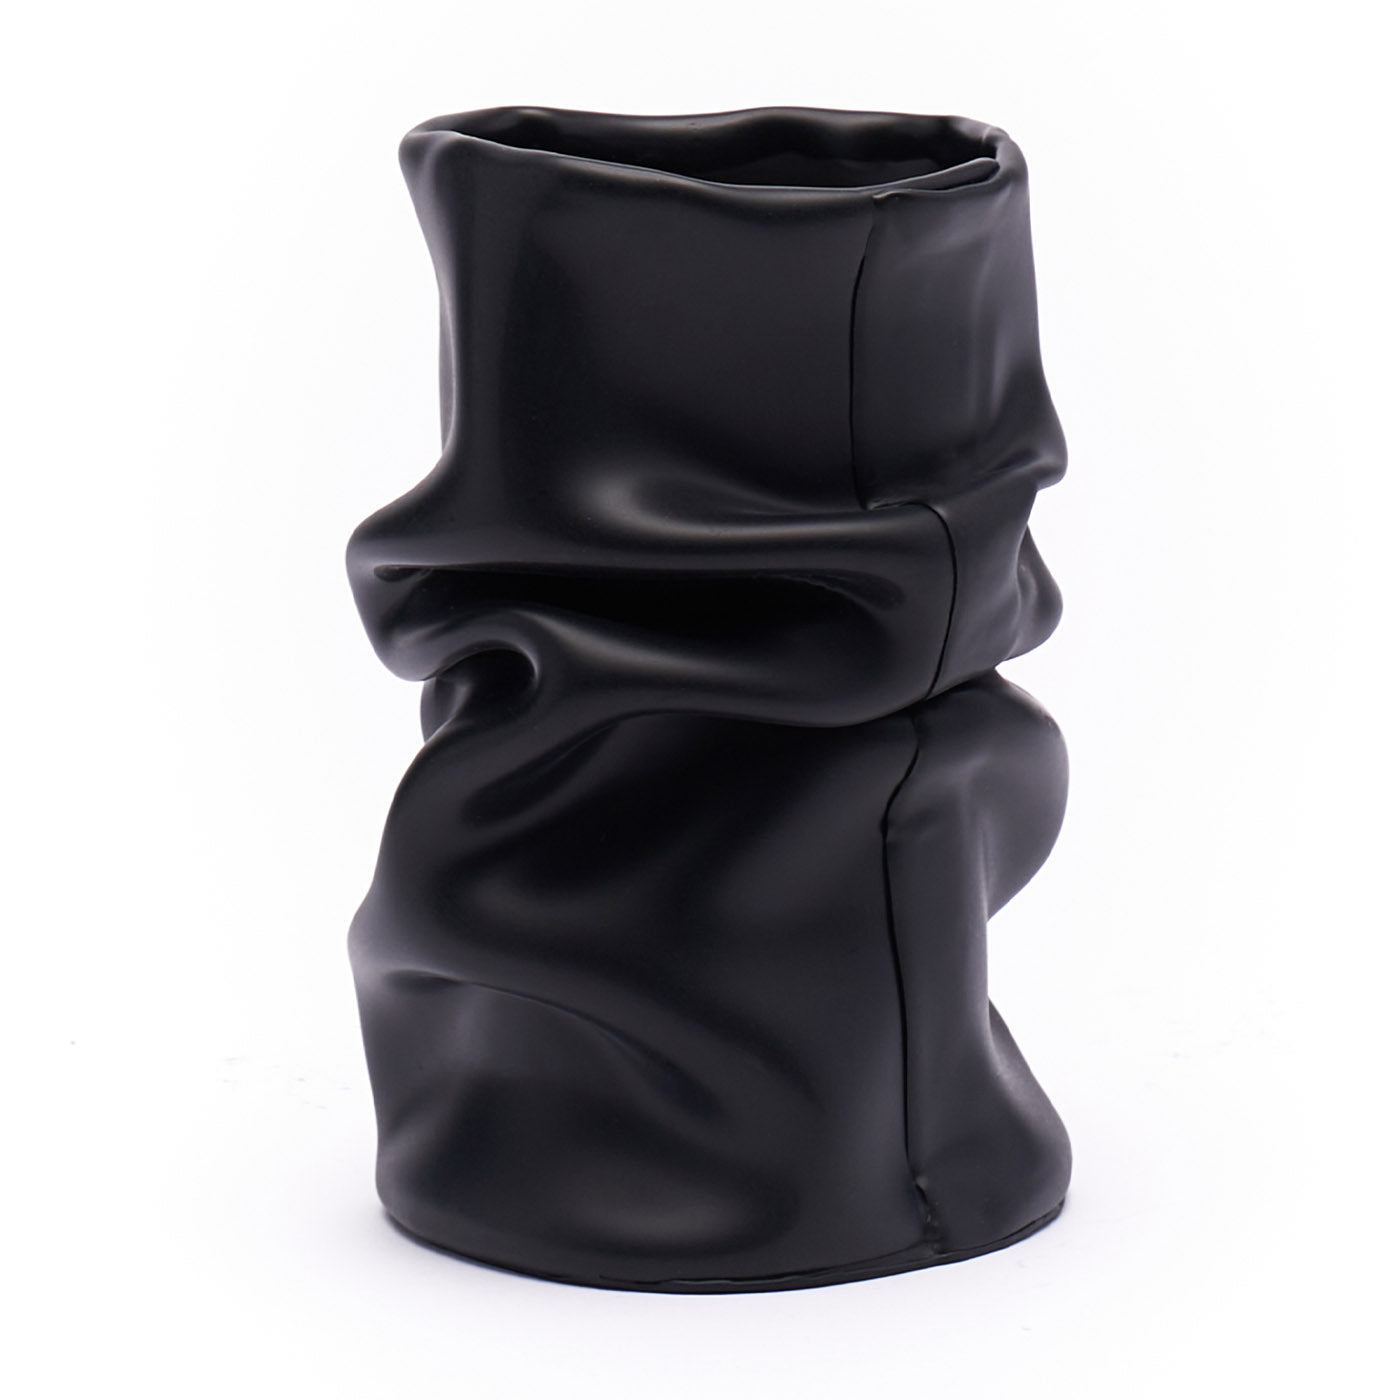 Venere Extra-Small Black Vase - Alternative view 2